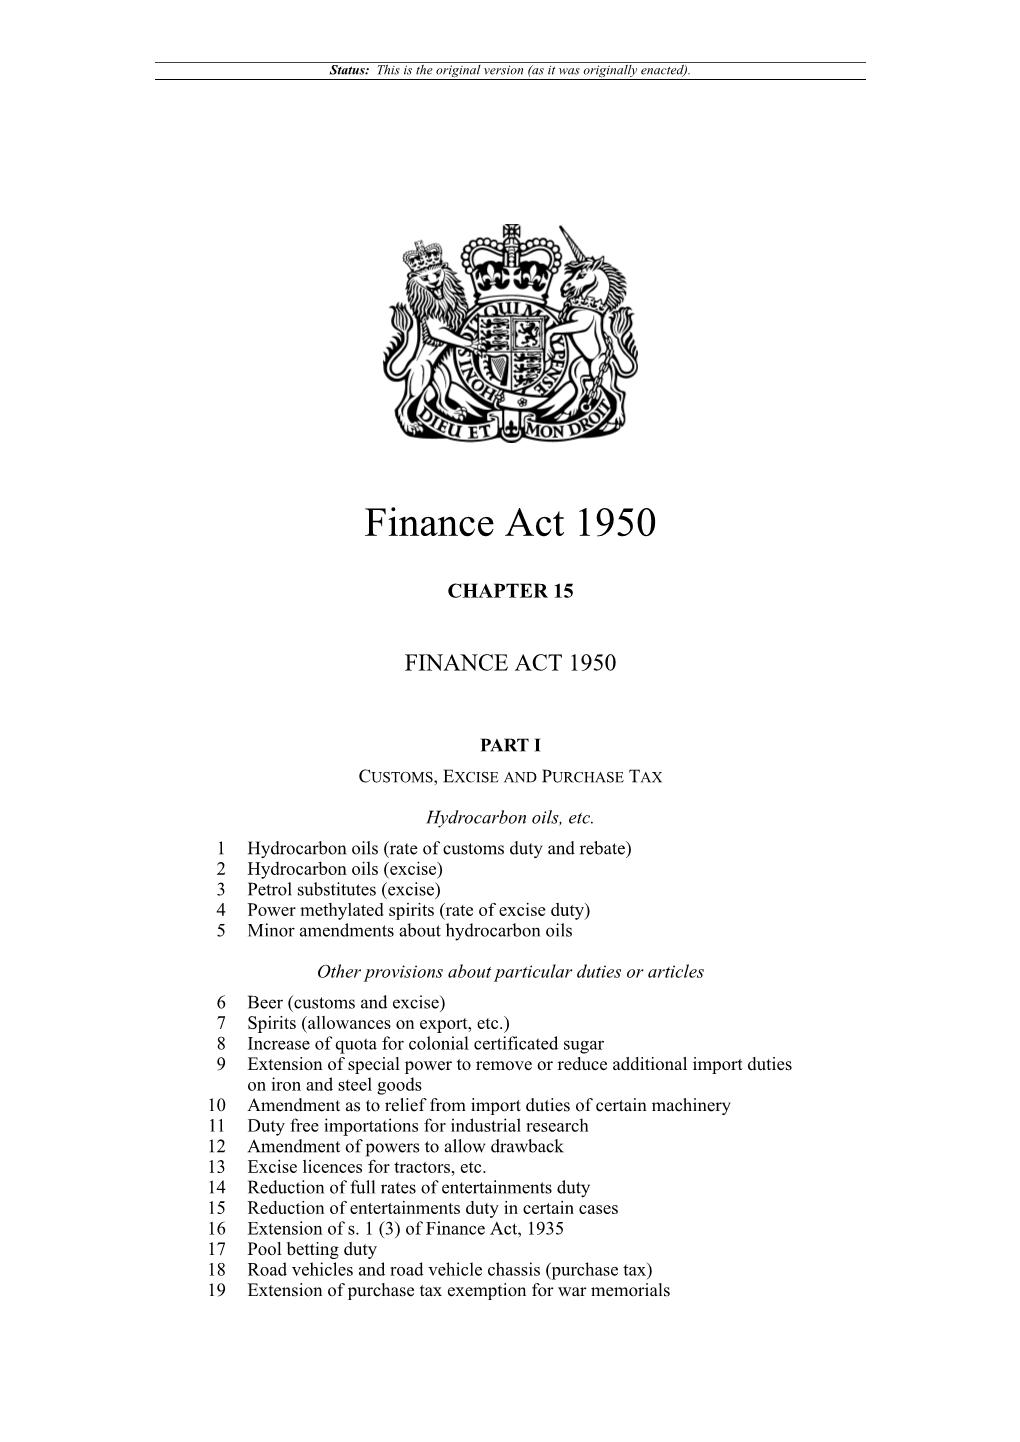 Finance Act 1950